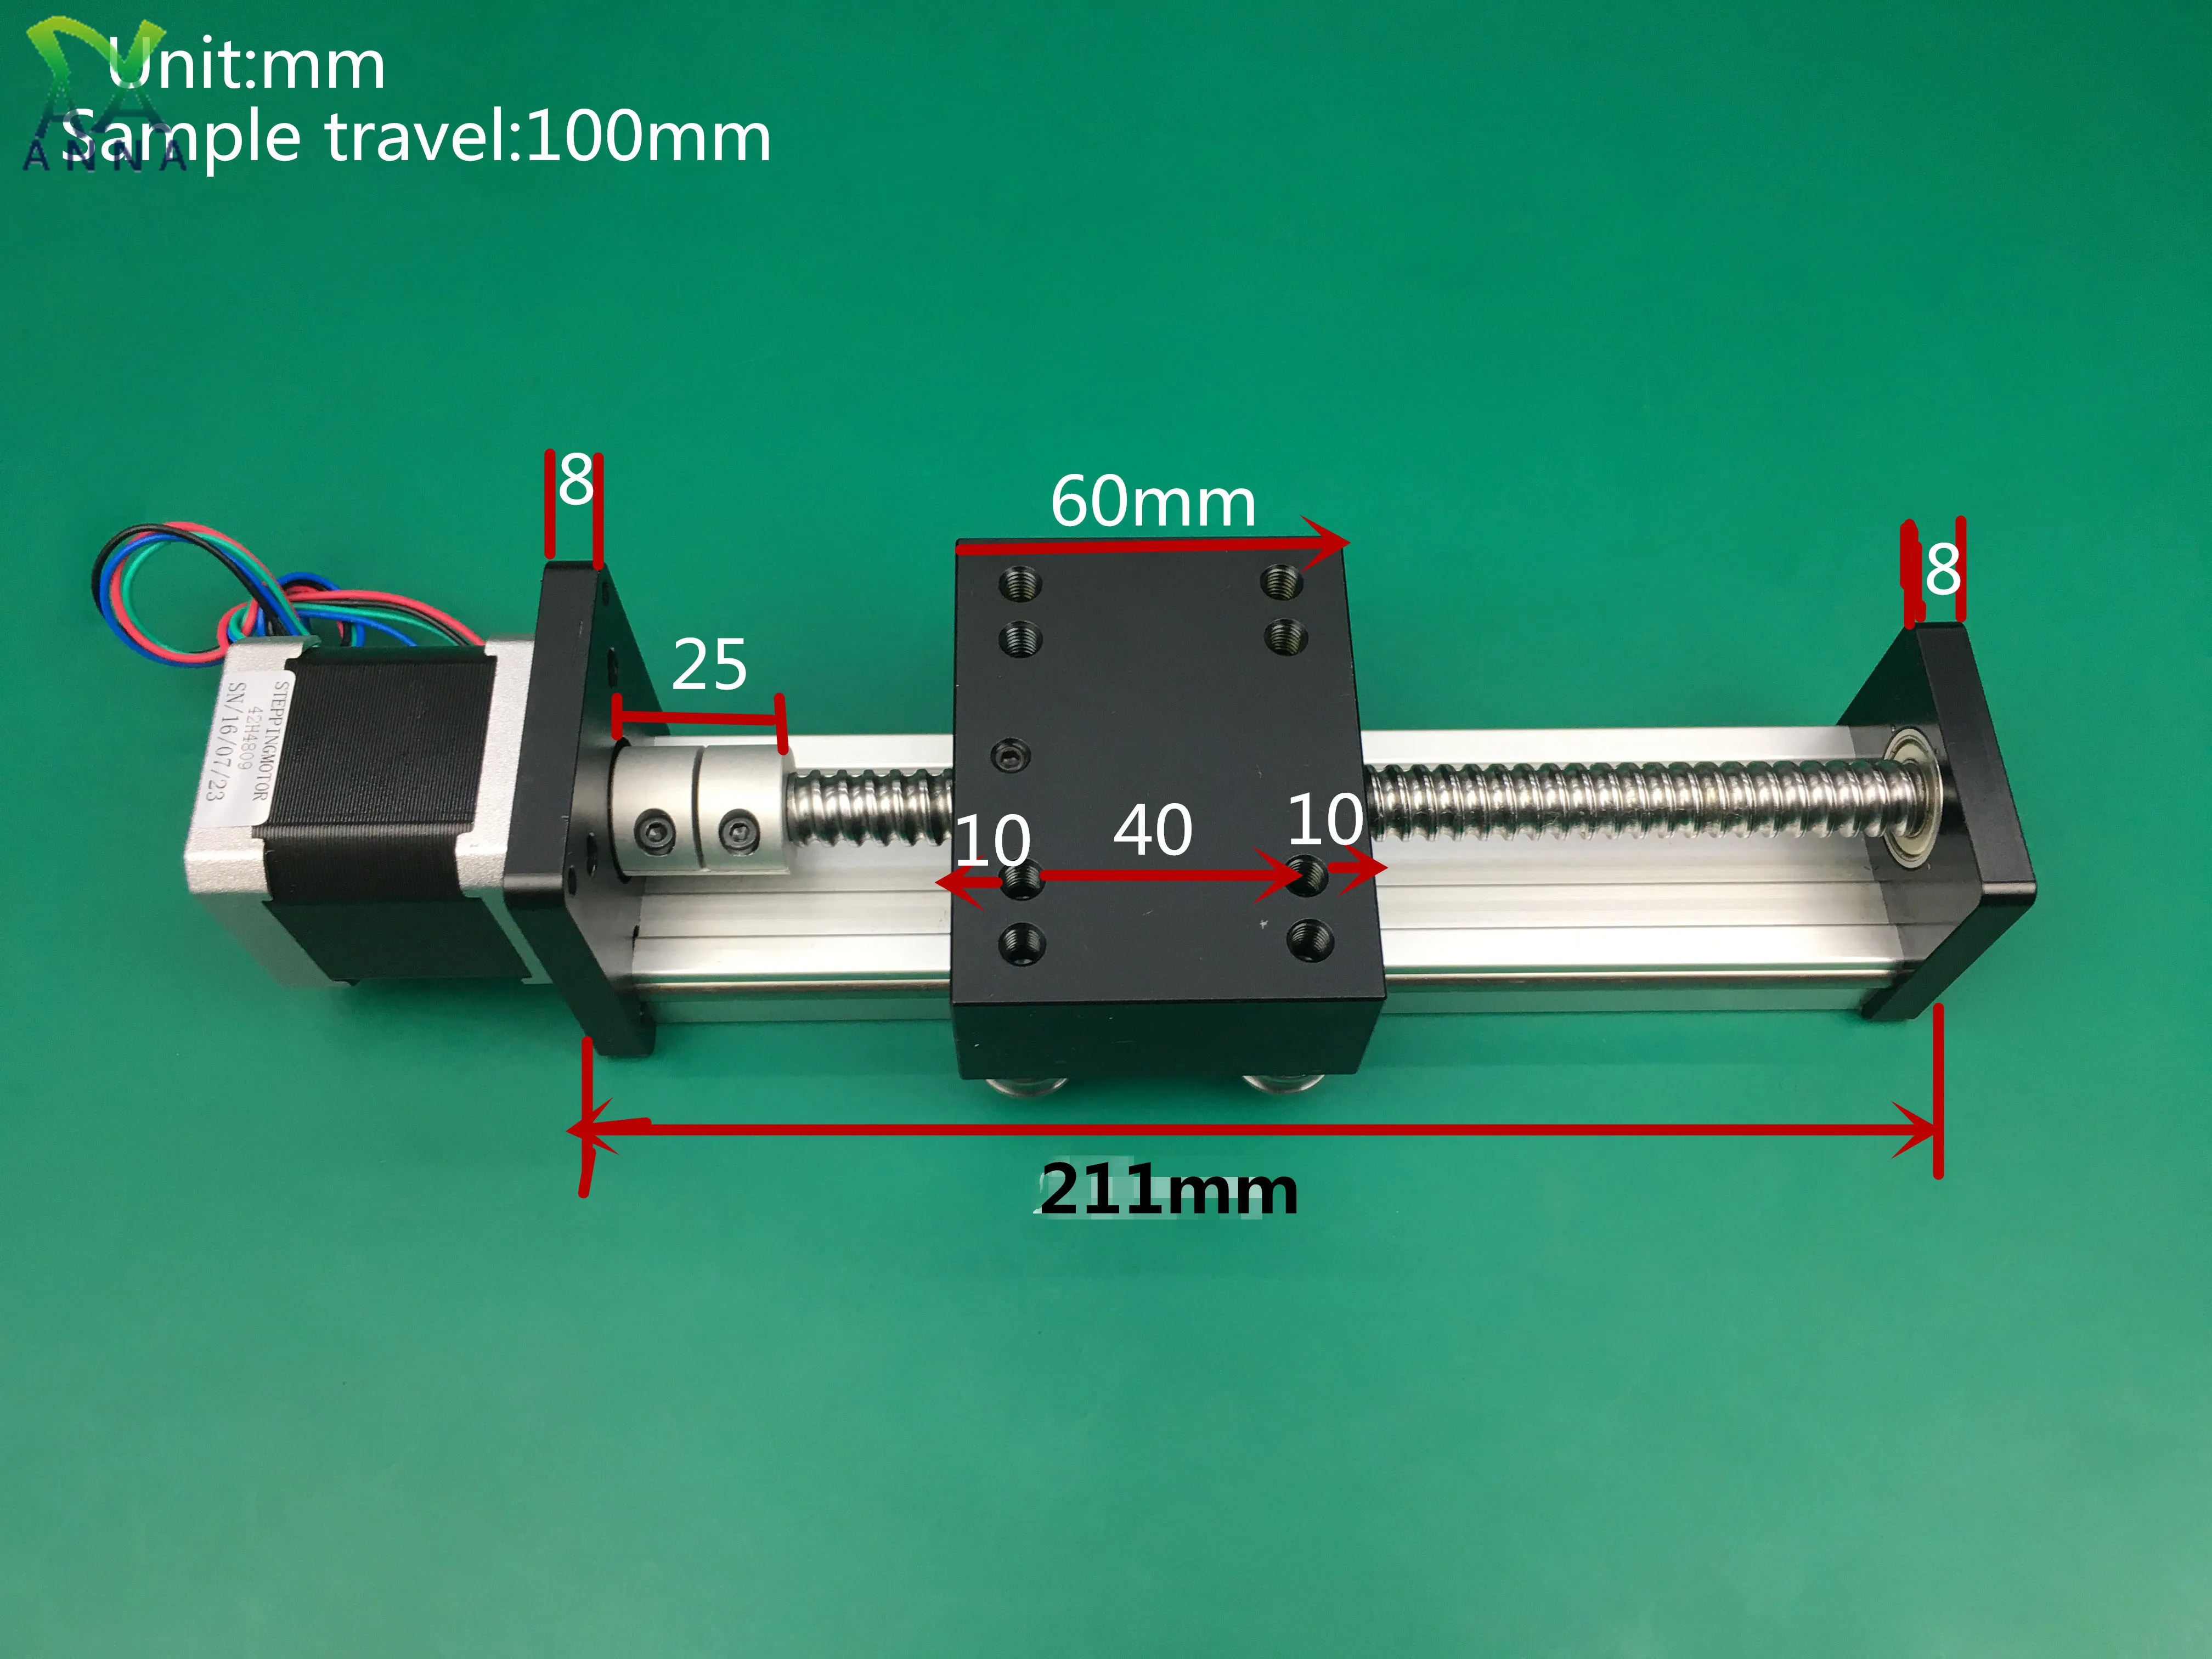 1610 WHEEJE CNC Linear Slide Stage 500mm Travel Length Ball Screw Slide Rail with Nema23 57 Stepper Motor 